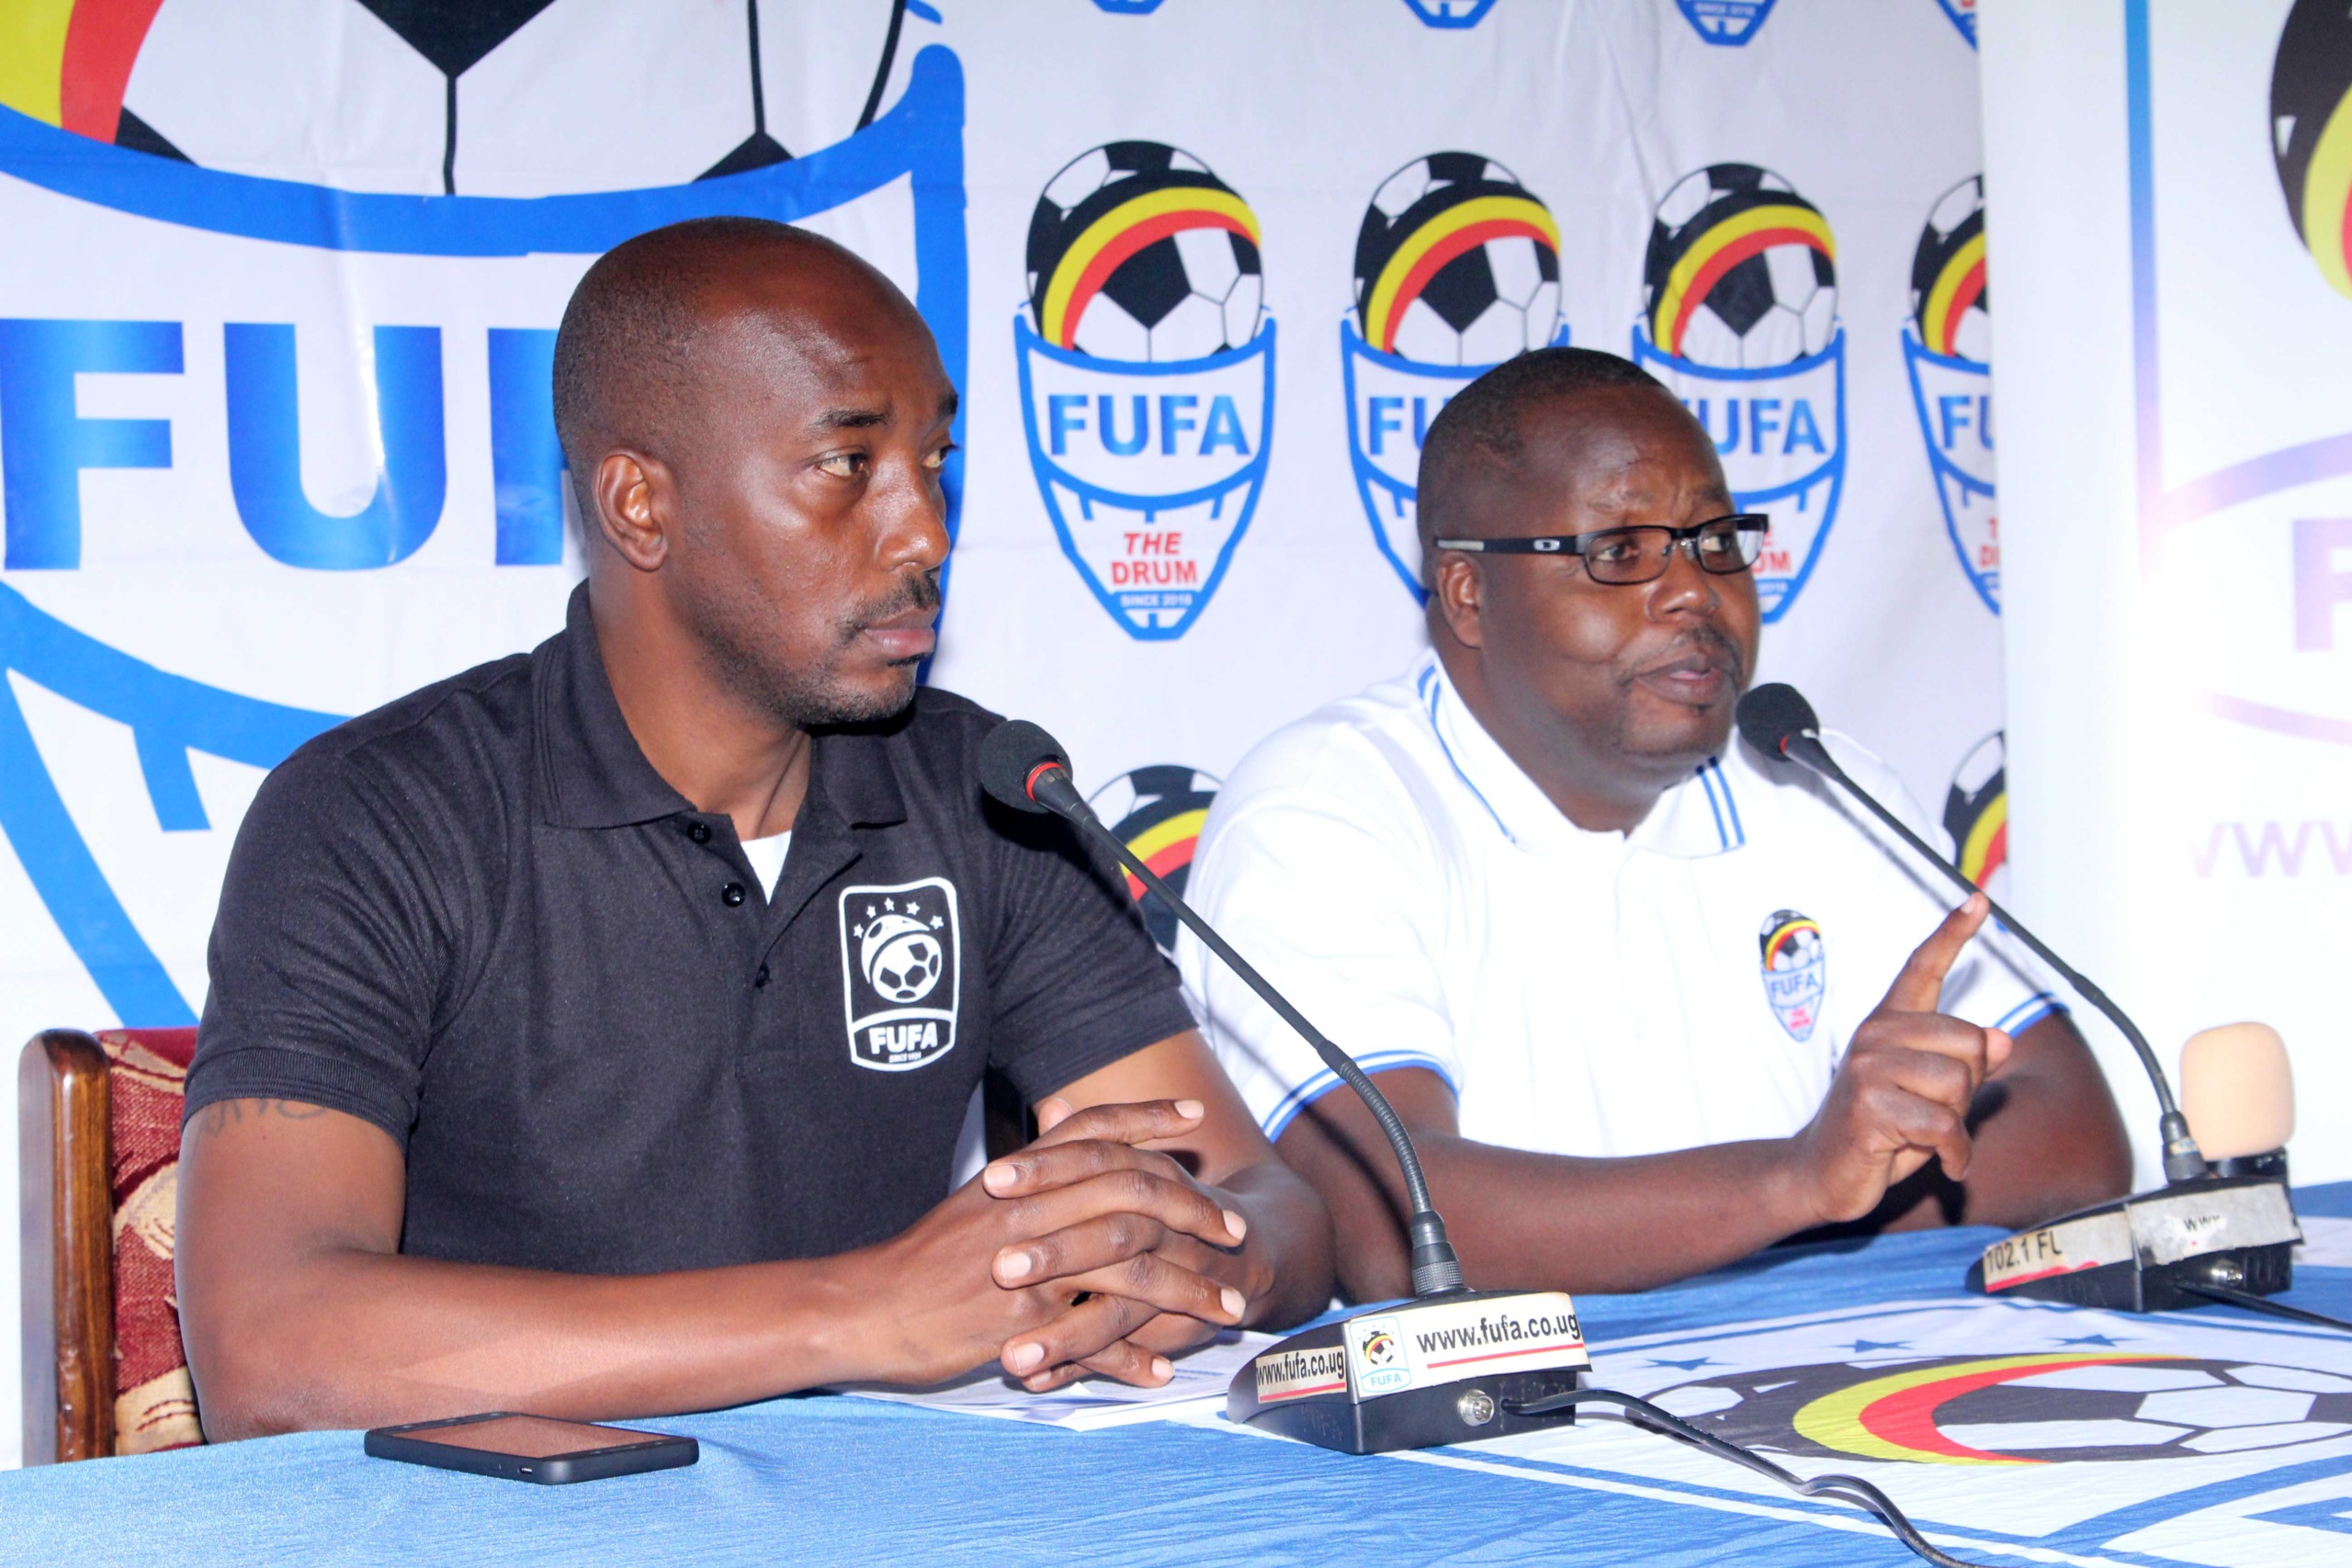 FUFA Drum 2018: The tournament has progressed for the better, says organizing committee chairman Byamukama